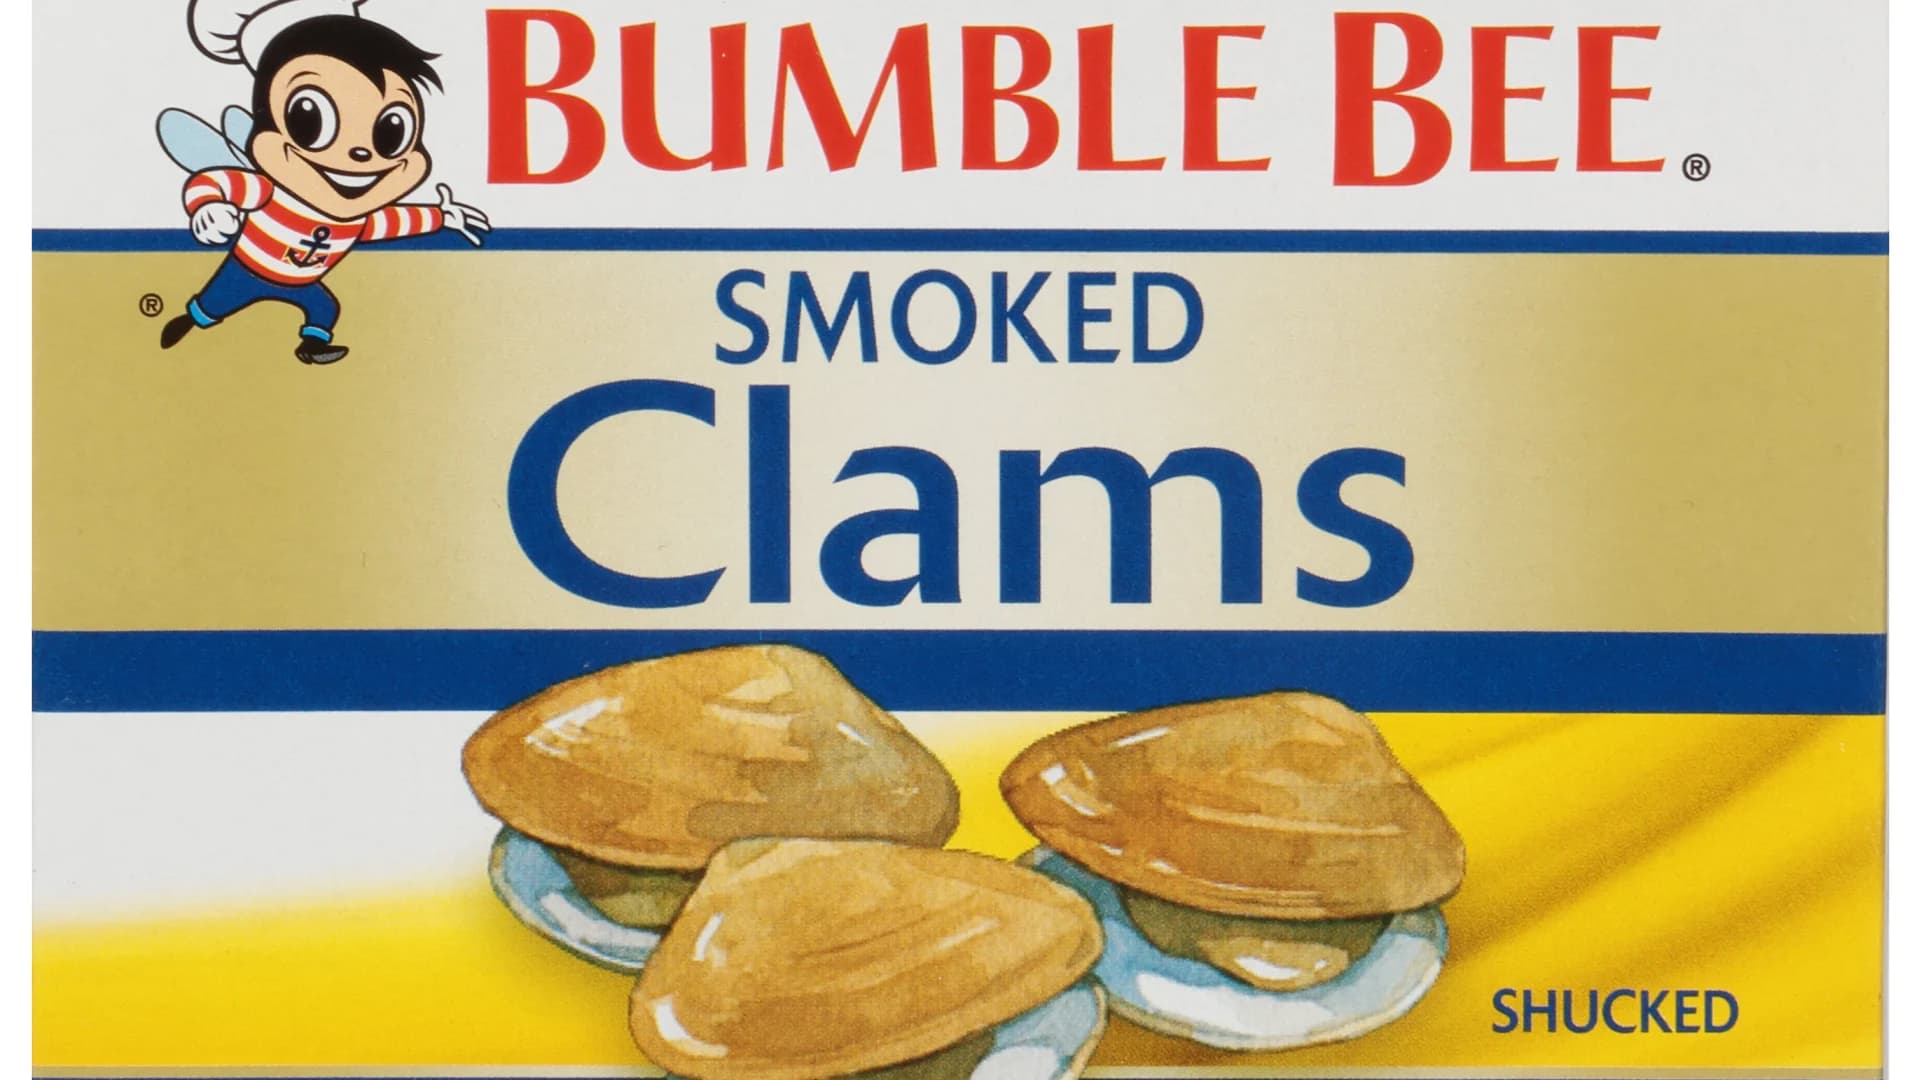 Bumble Bee recalls smoked clams due to presence of PFAS